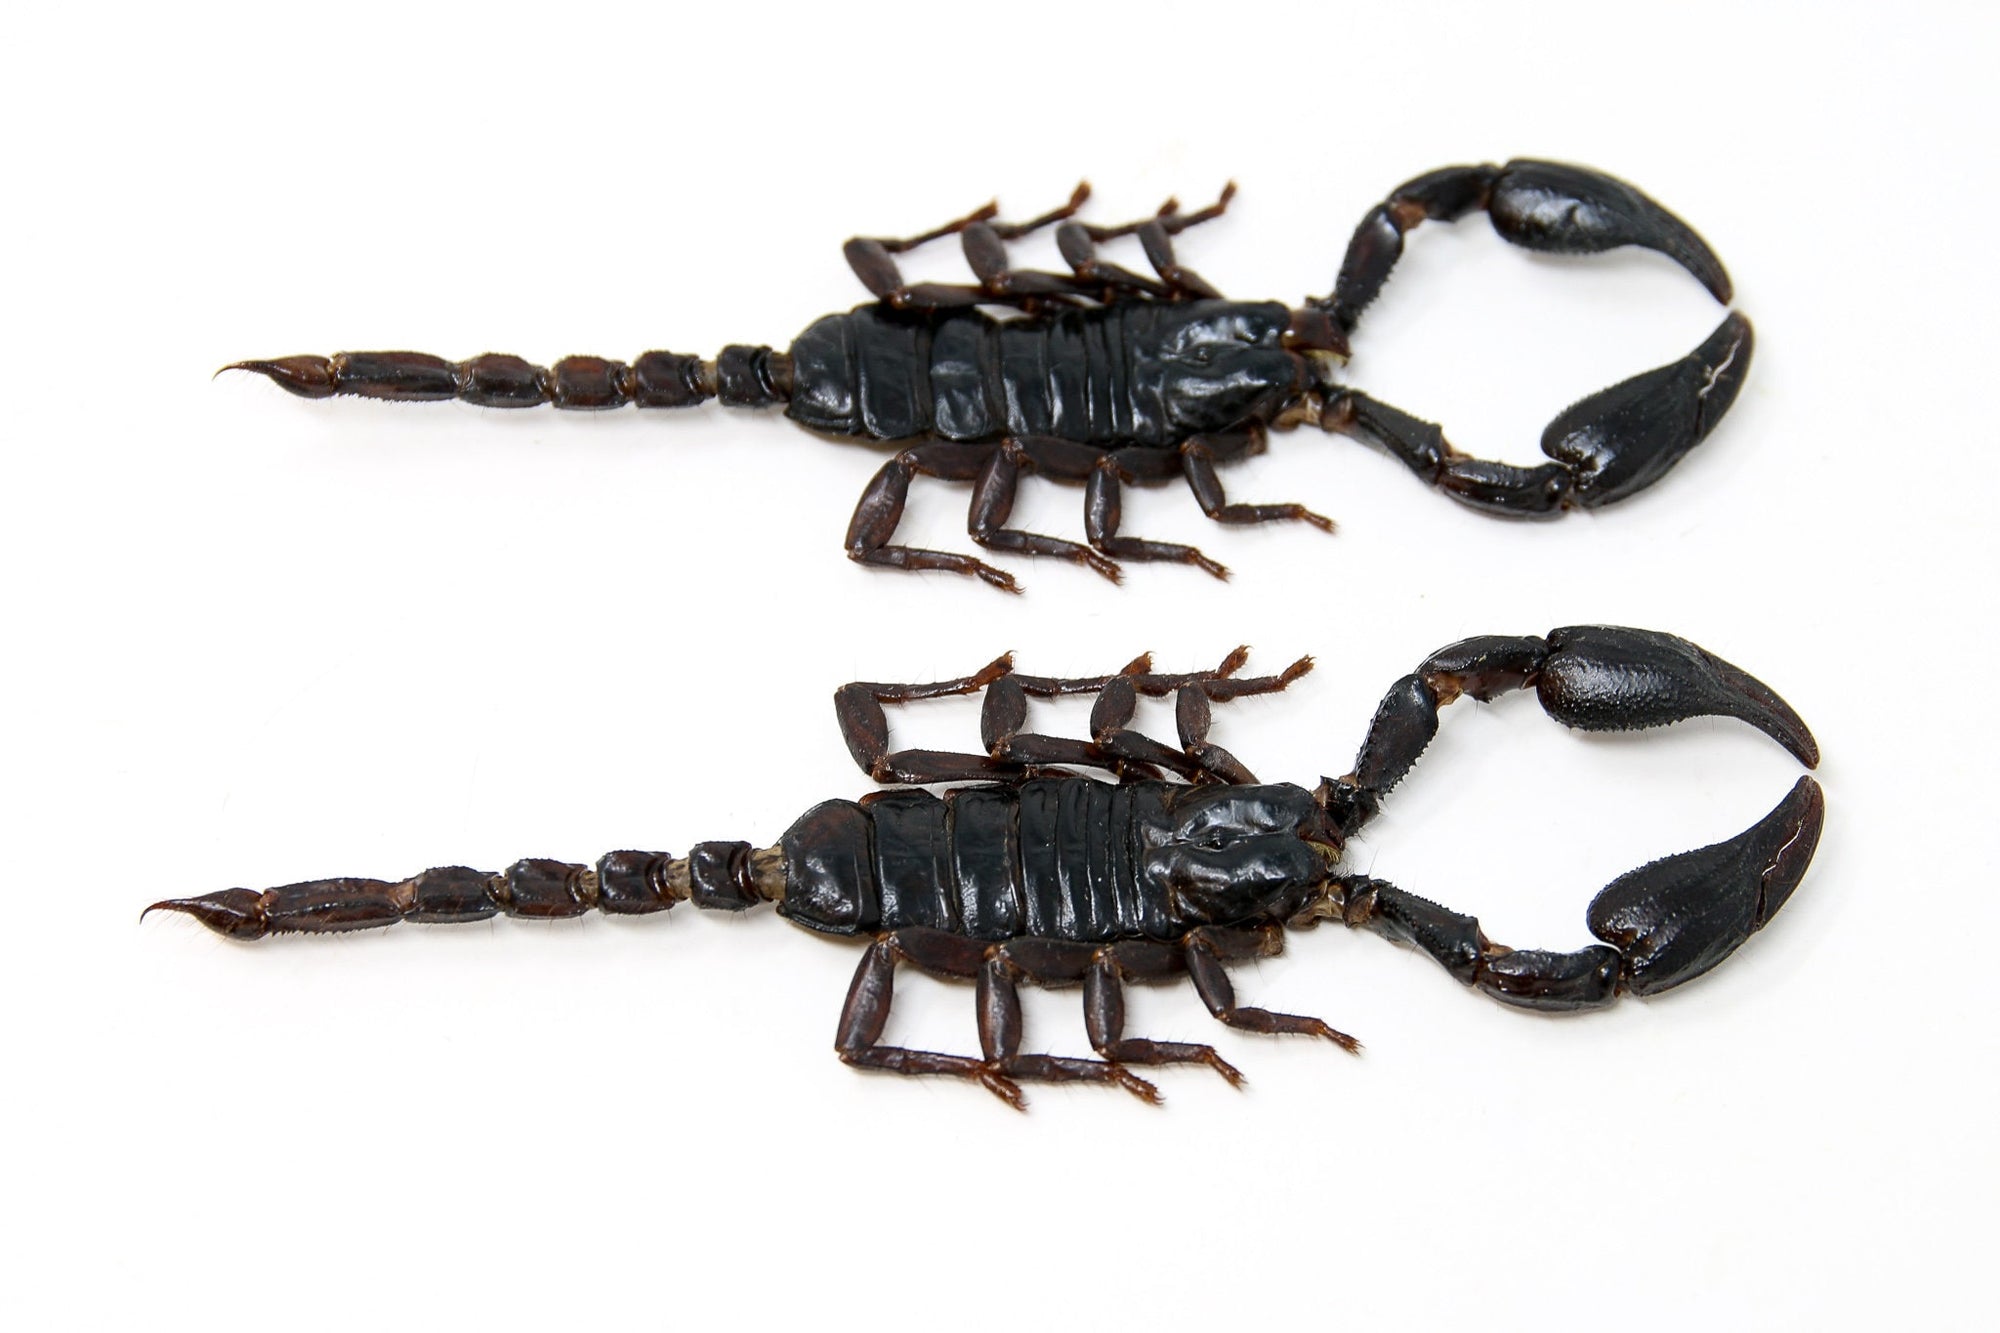 2 x Thai Black Scorpions (Heterometrus spinifer) SIZE M/L (120-160mm) A1 Entomology Taxidermy Specimens